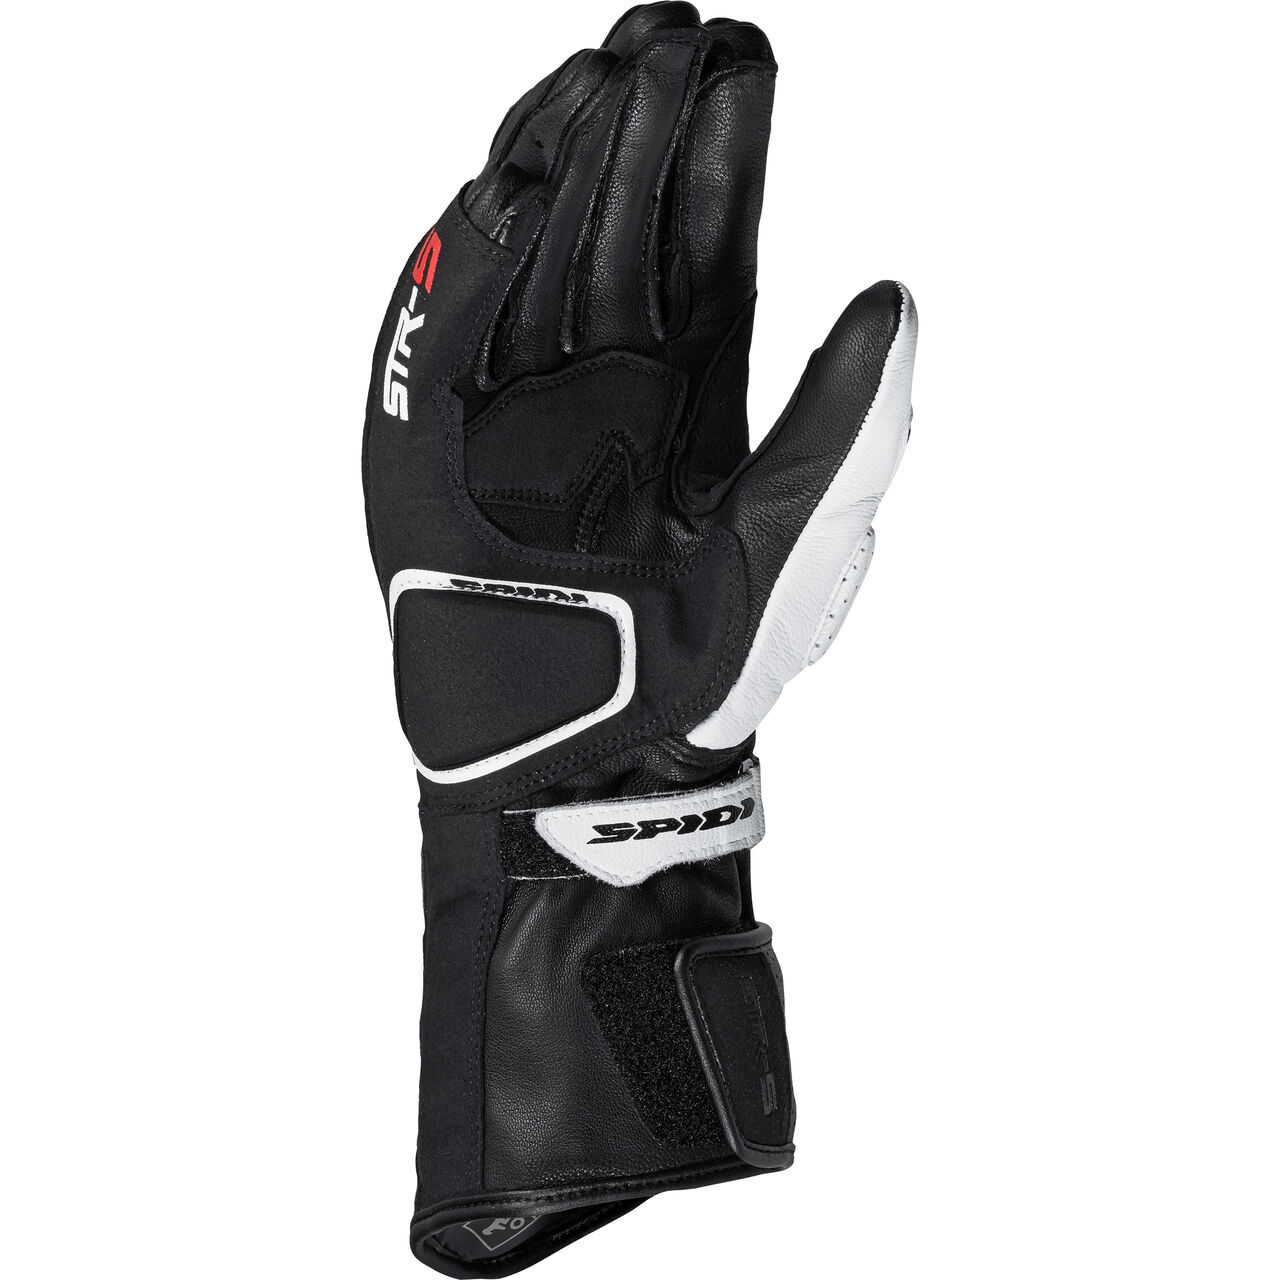 STR-5 Lady Leather Glove black/white